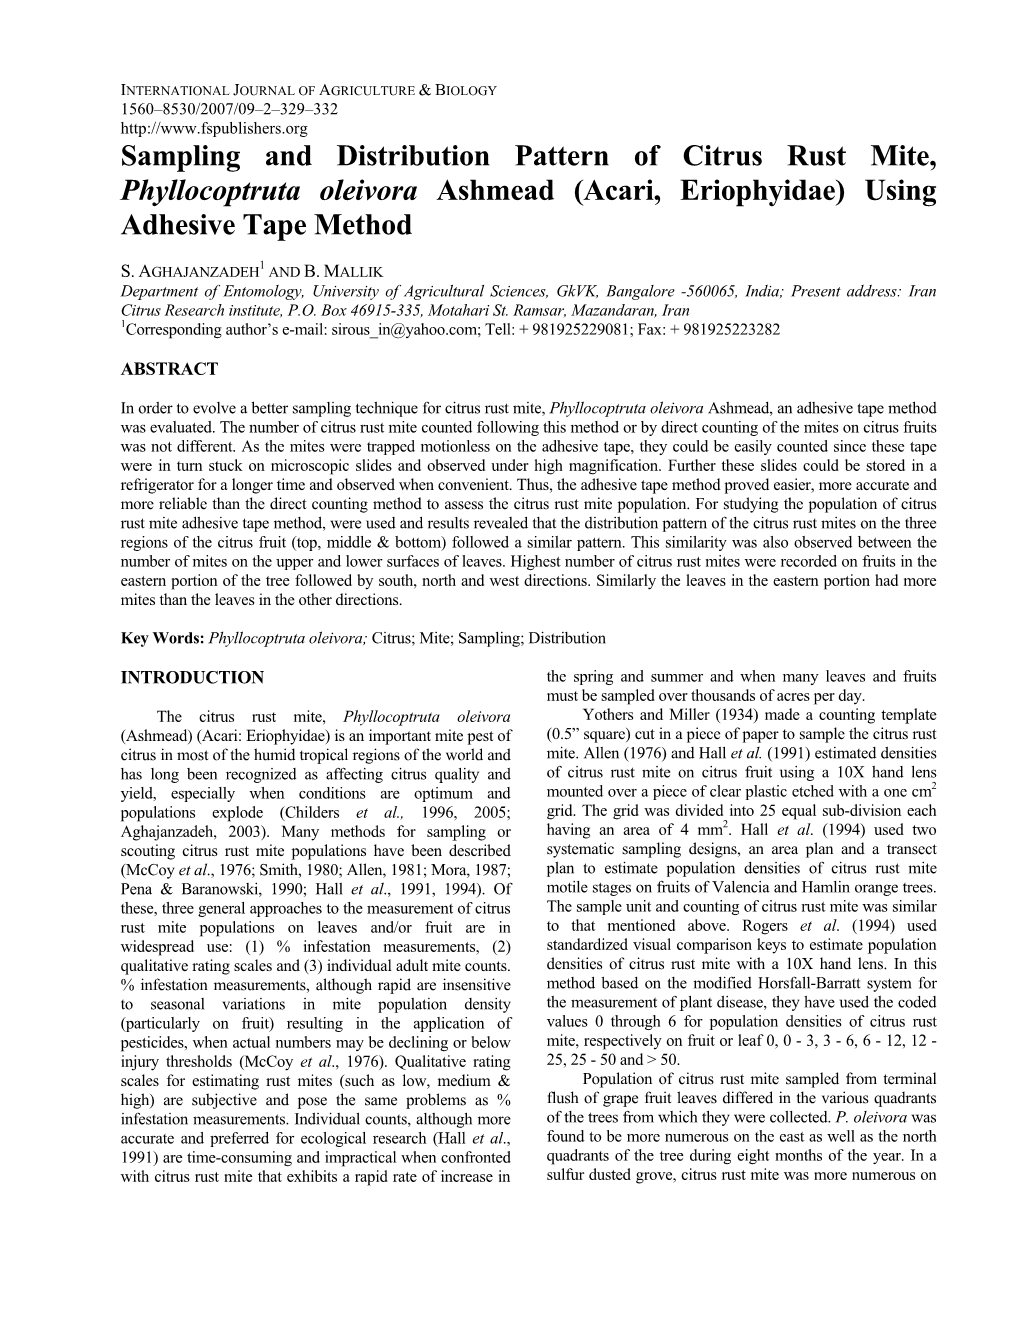 Sampling and Distribution Pattern of Citrus Rust Mite, Phyllocoptruta Oleivora Ashmead (Acari, Eriophyidae) Using Adhesive Tape Method